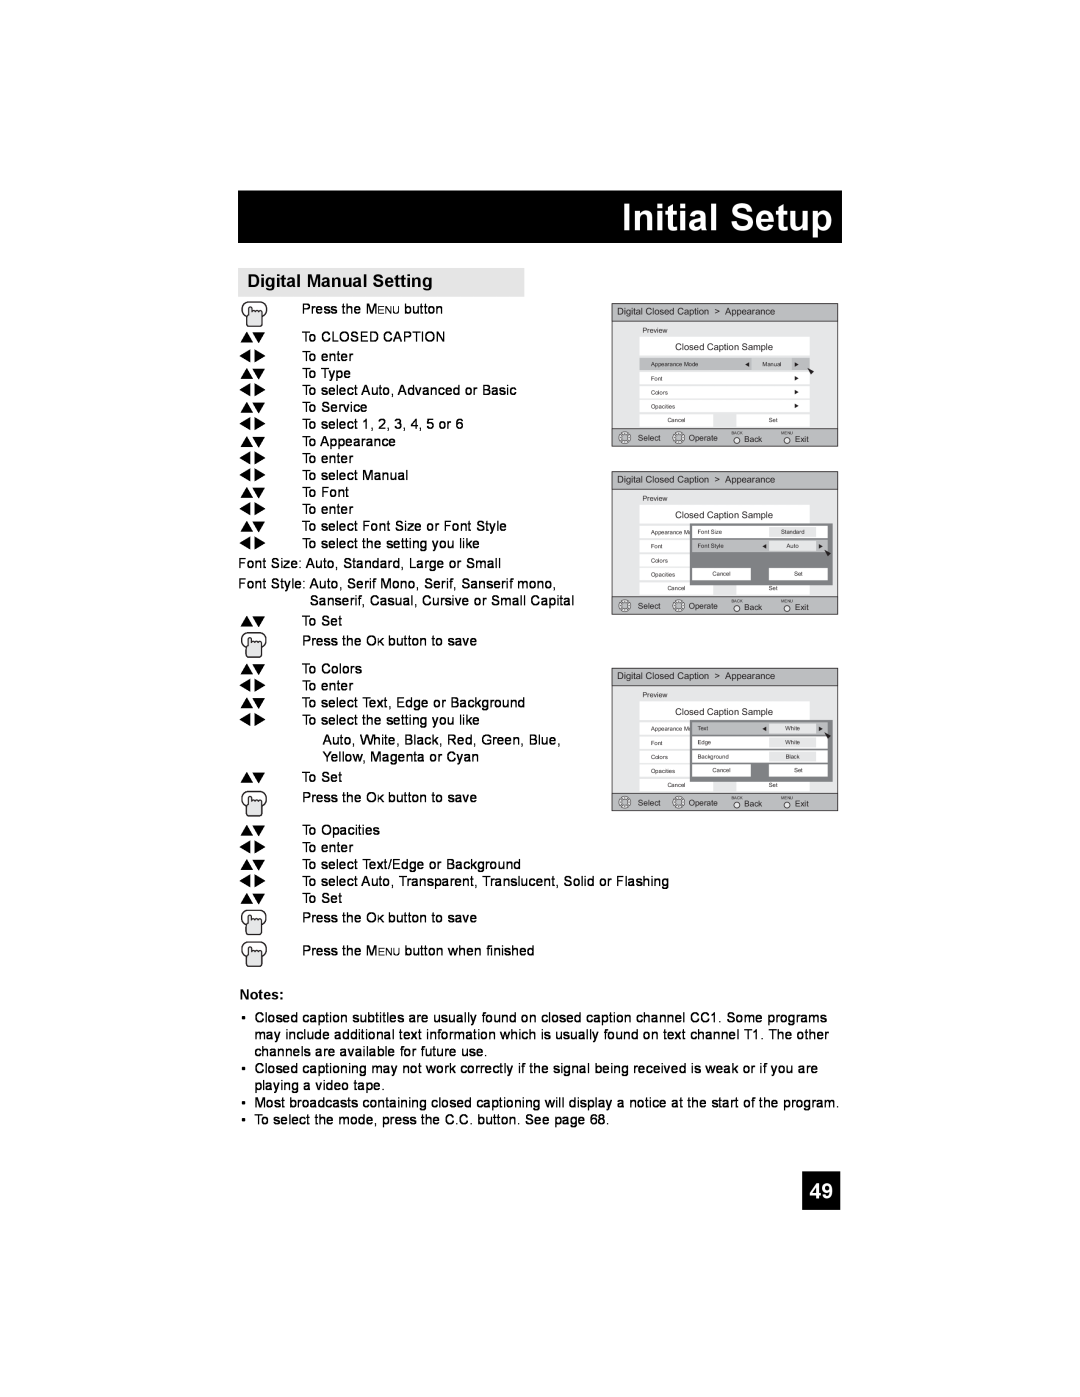 JVC PD-42X776 manual Digital Manual Setting, Initial Setup, To select Auto, Transparent, Translucent, Solid or Flashing 